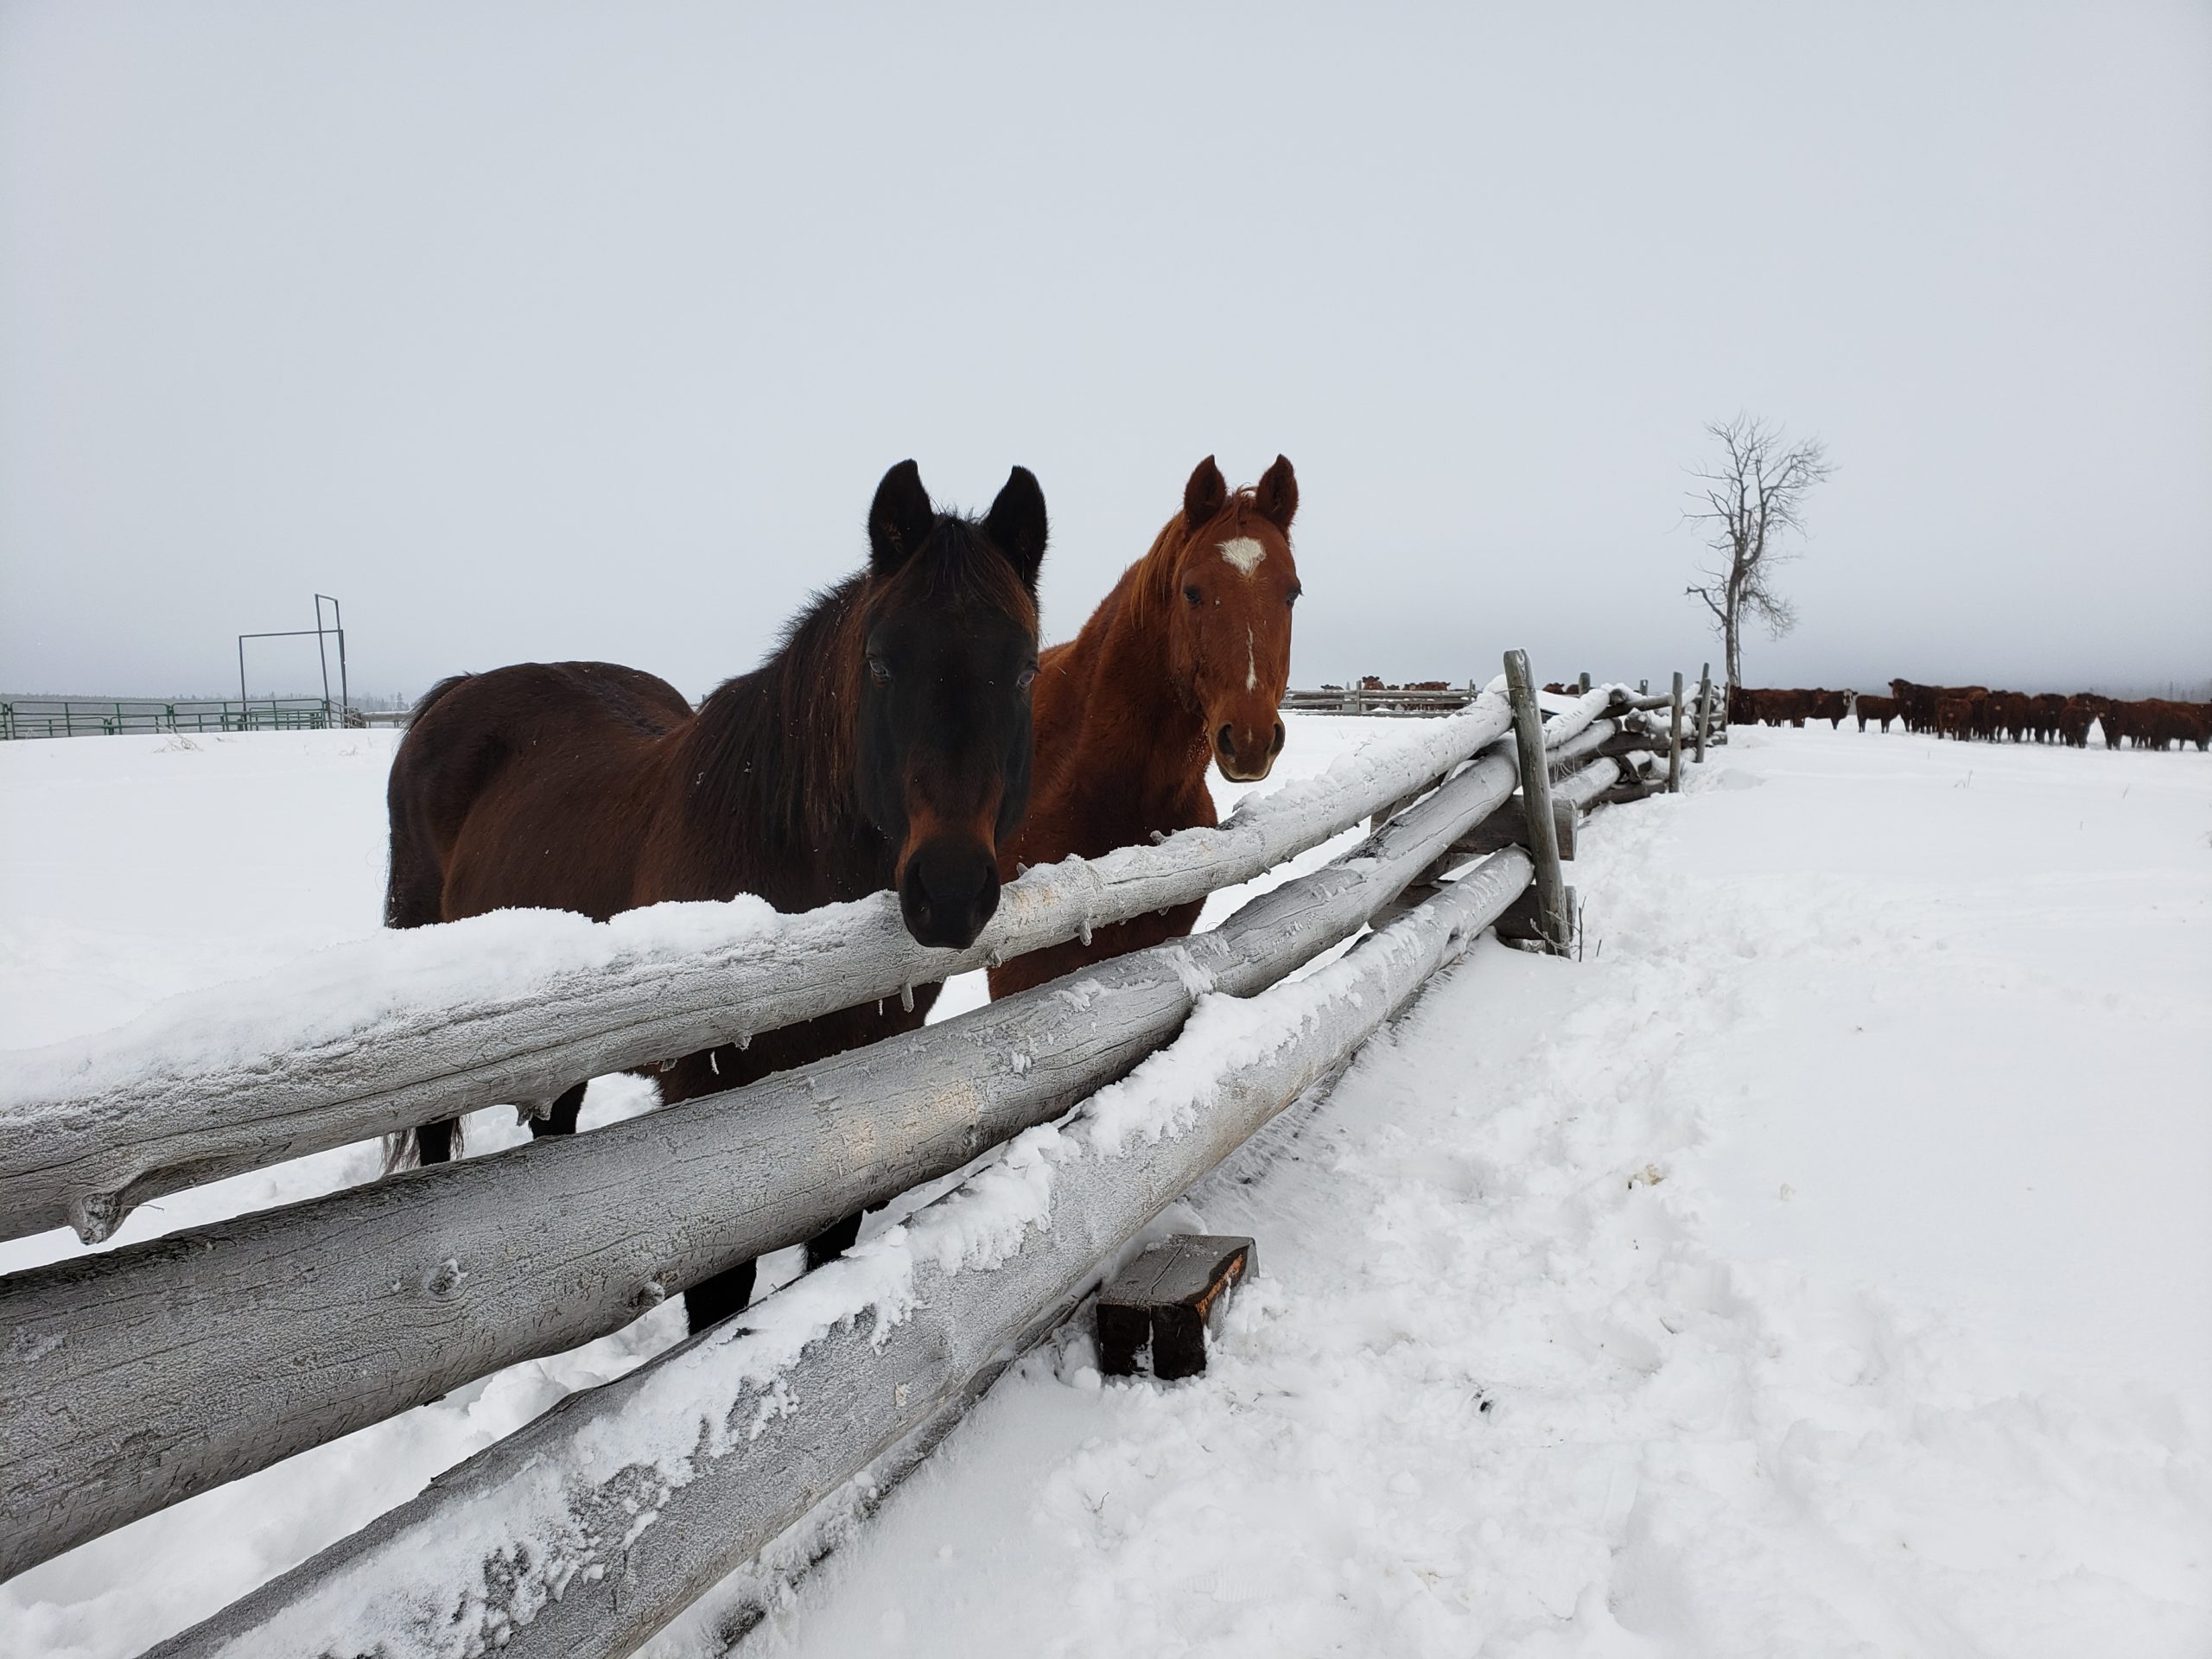 two horses in a snowy field